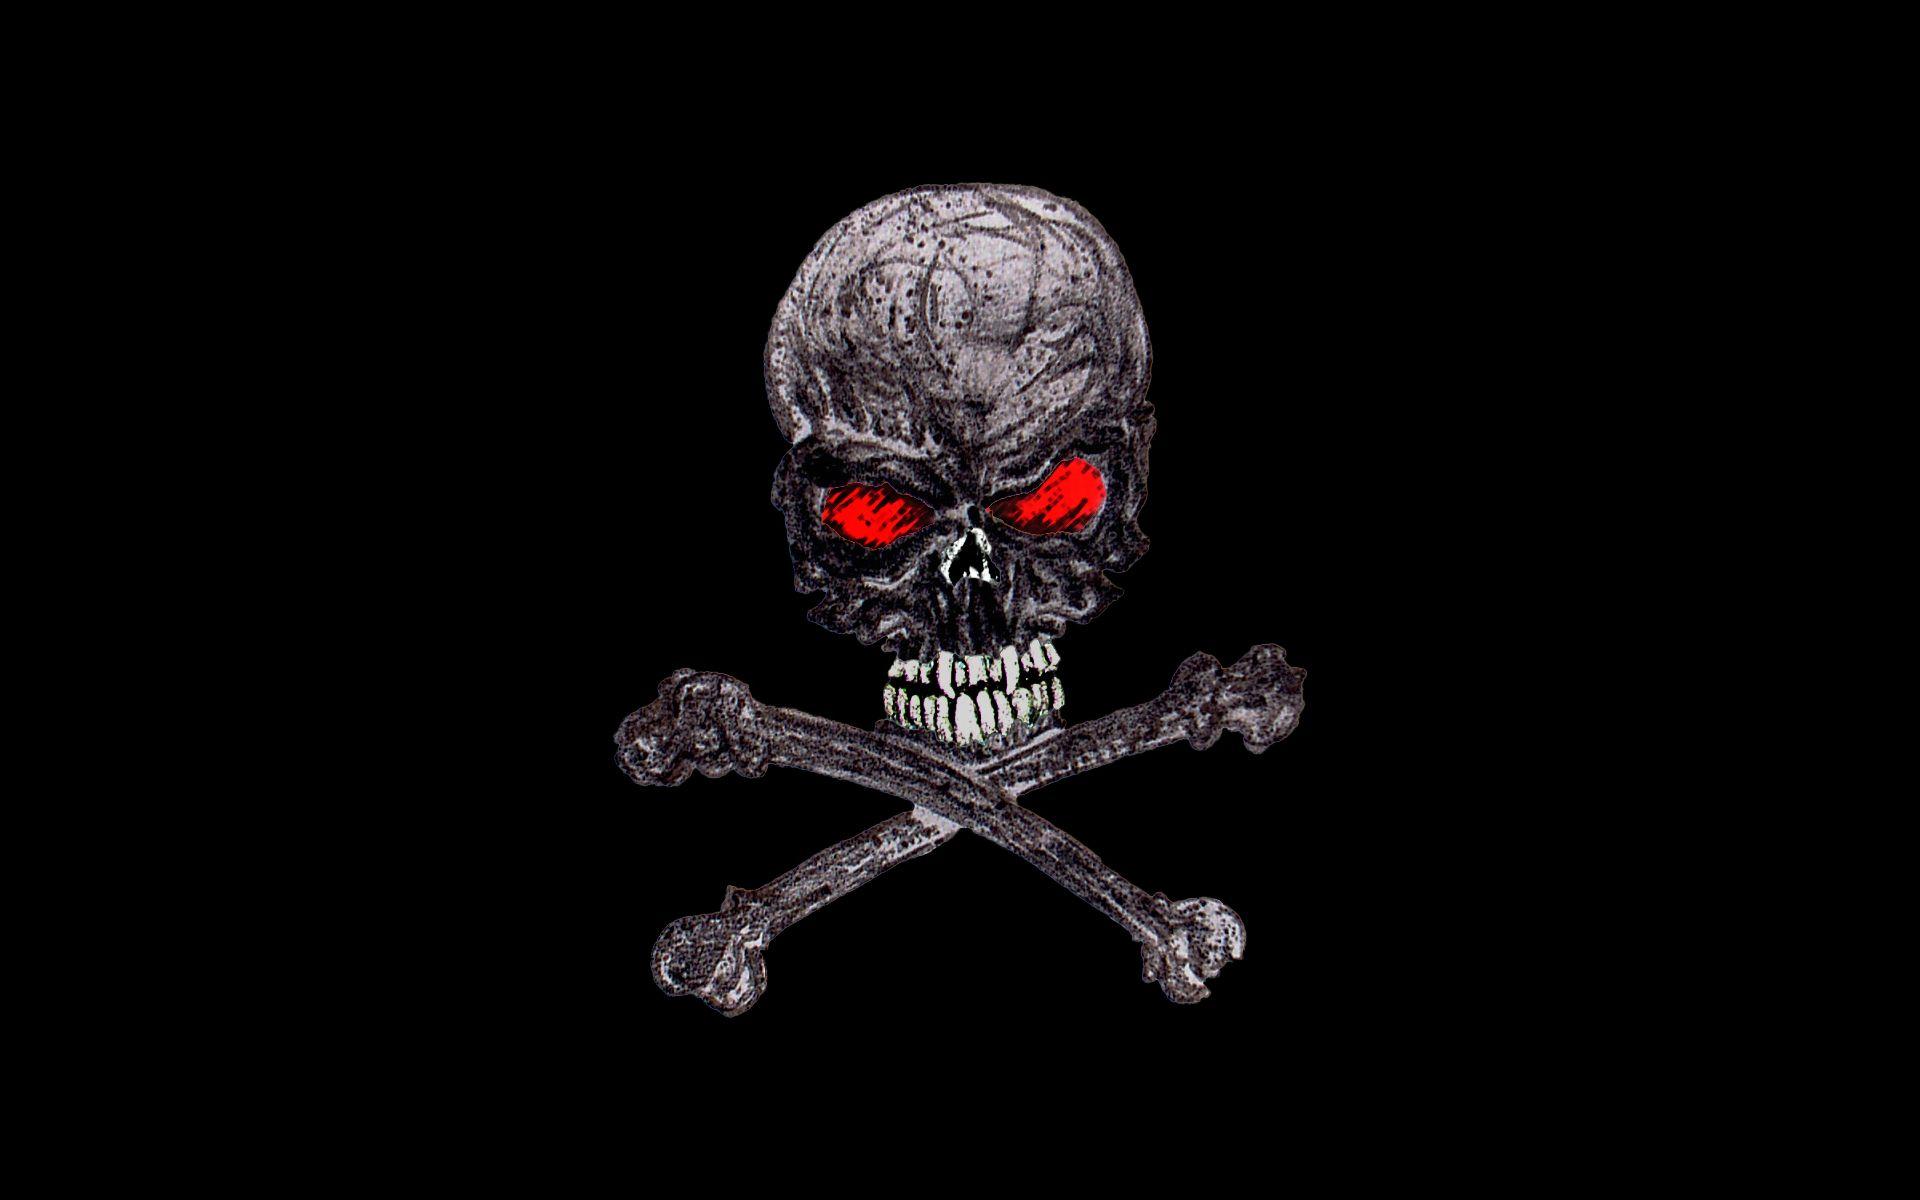 Download the Sketchy Dark Skull Wallpaper, Sketchy Dark Skull iPhone